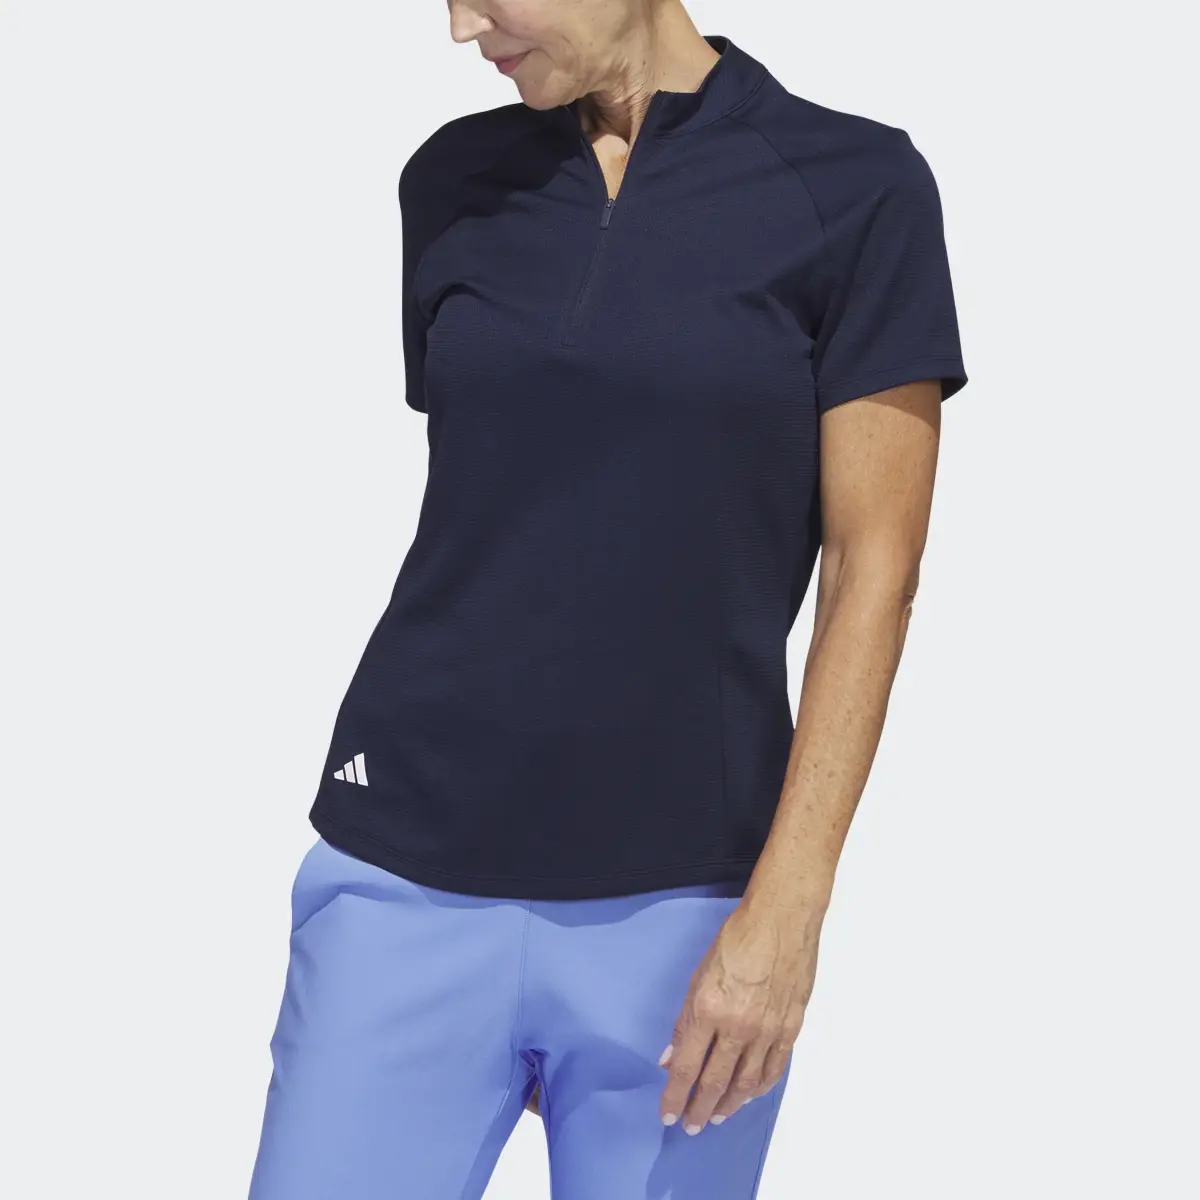 Adidas Textured Golf Polo Shirt. 1